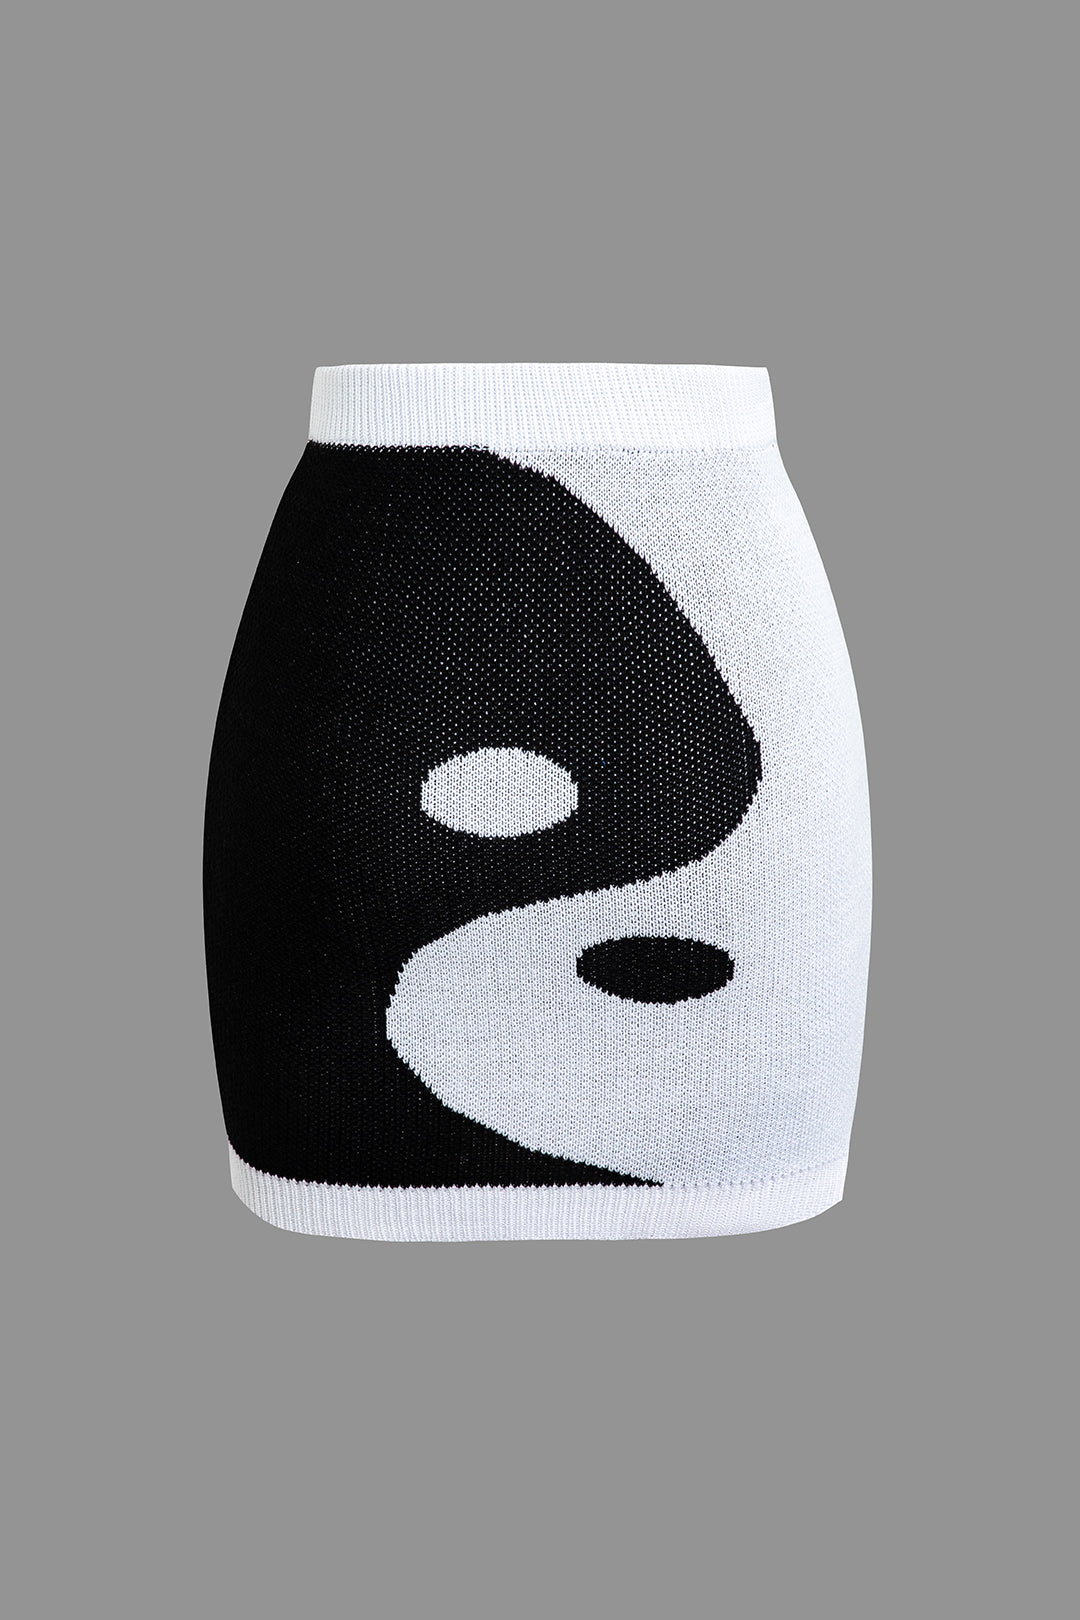 Tai Chi Print Contrast Crop Knit Top And Mini Skirt Set